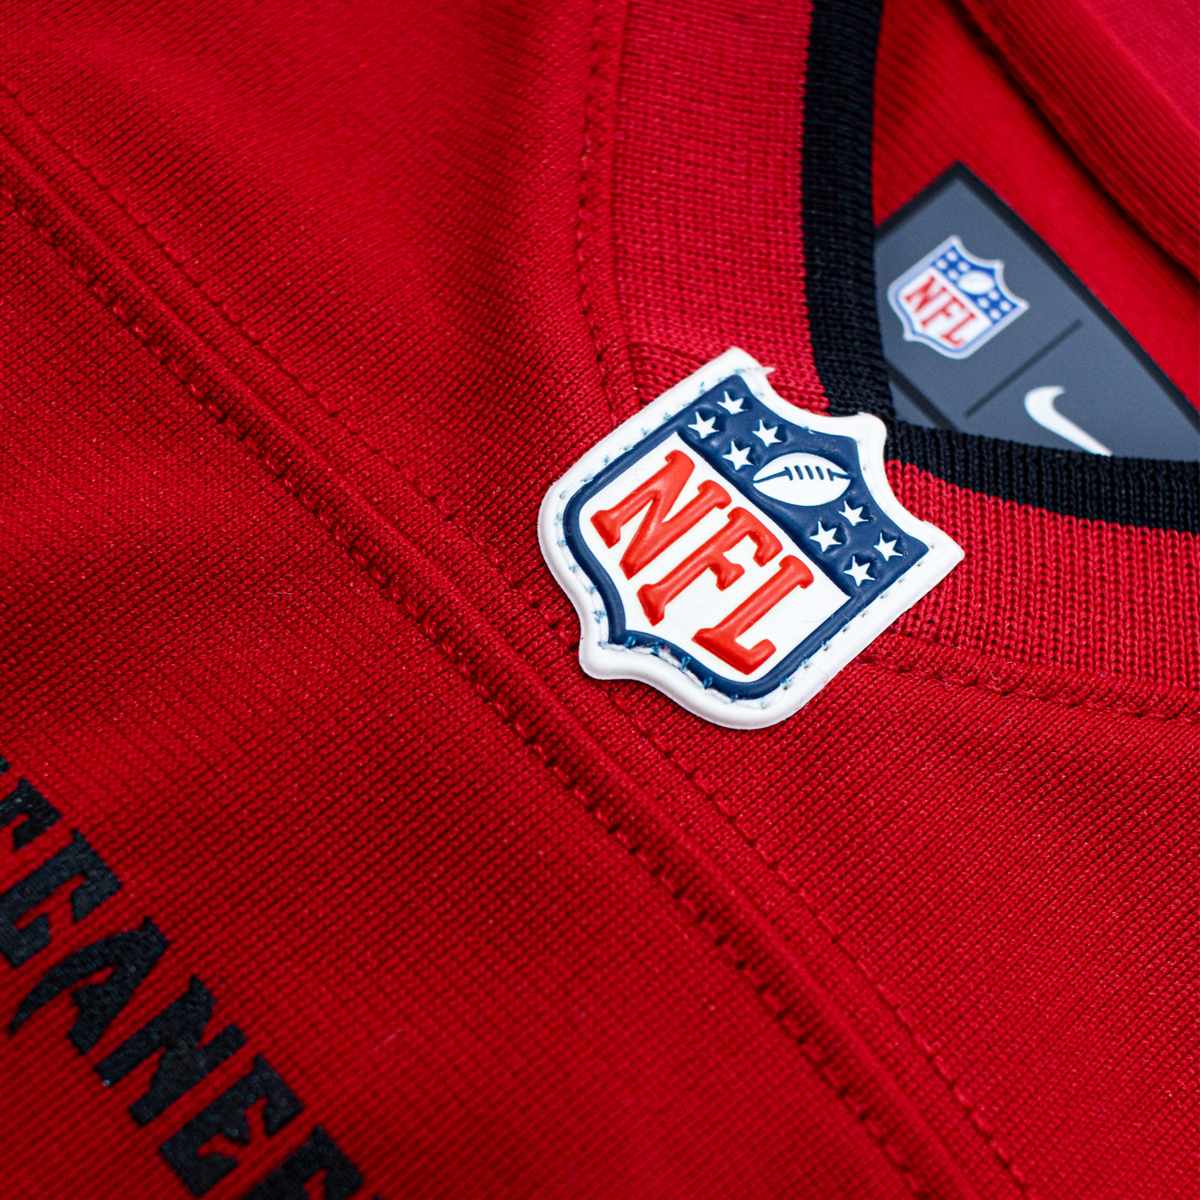 Nike Tampa Bay Buccaneers Tom Brady #12 NFL Game Jersey Romper EZ1I1H2P9-BCNBT-